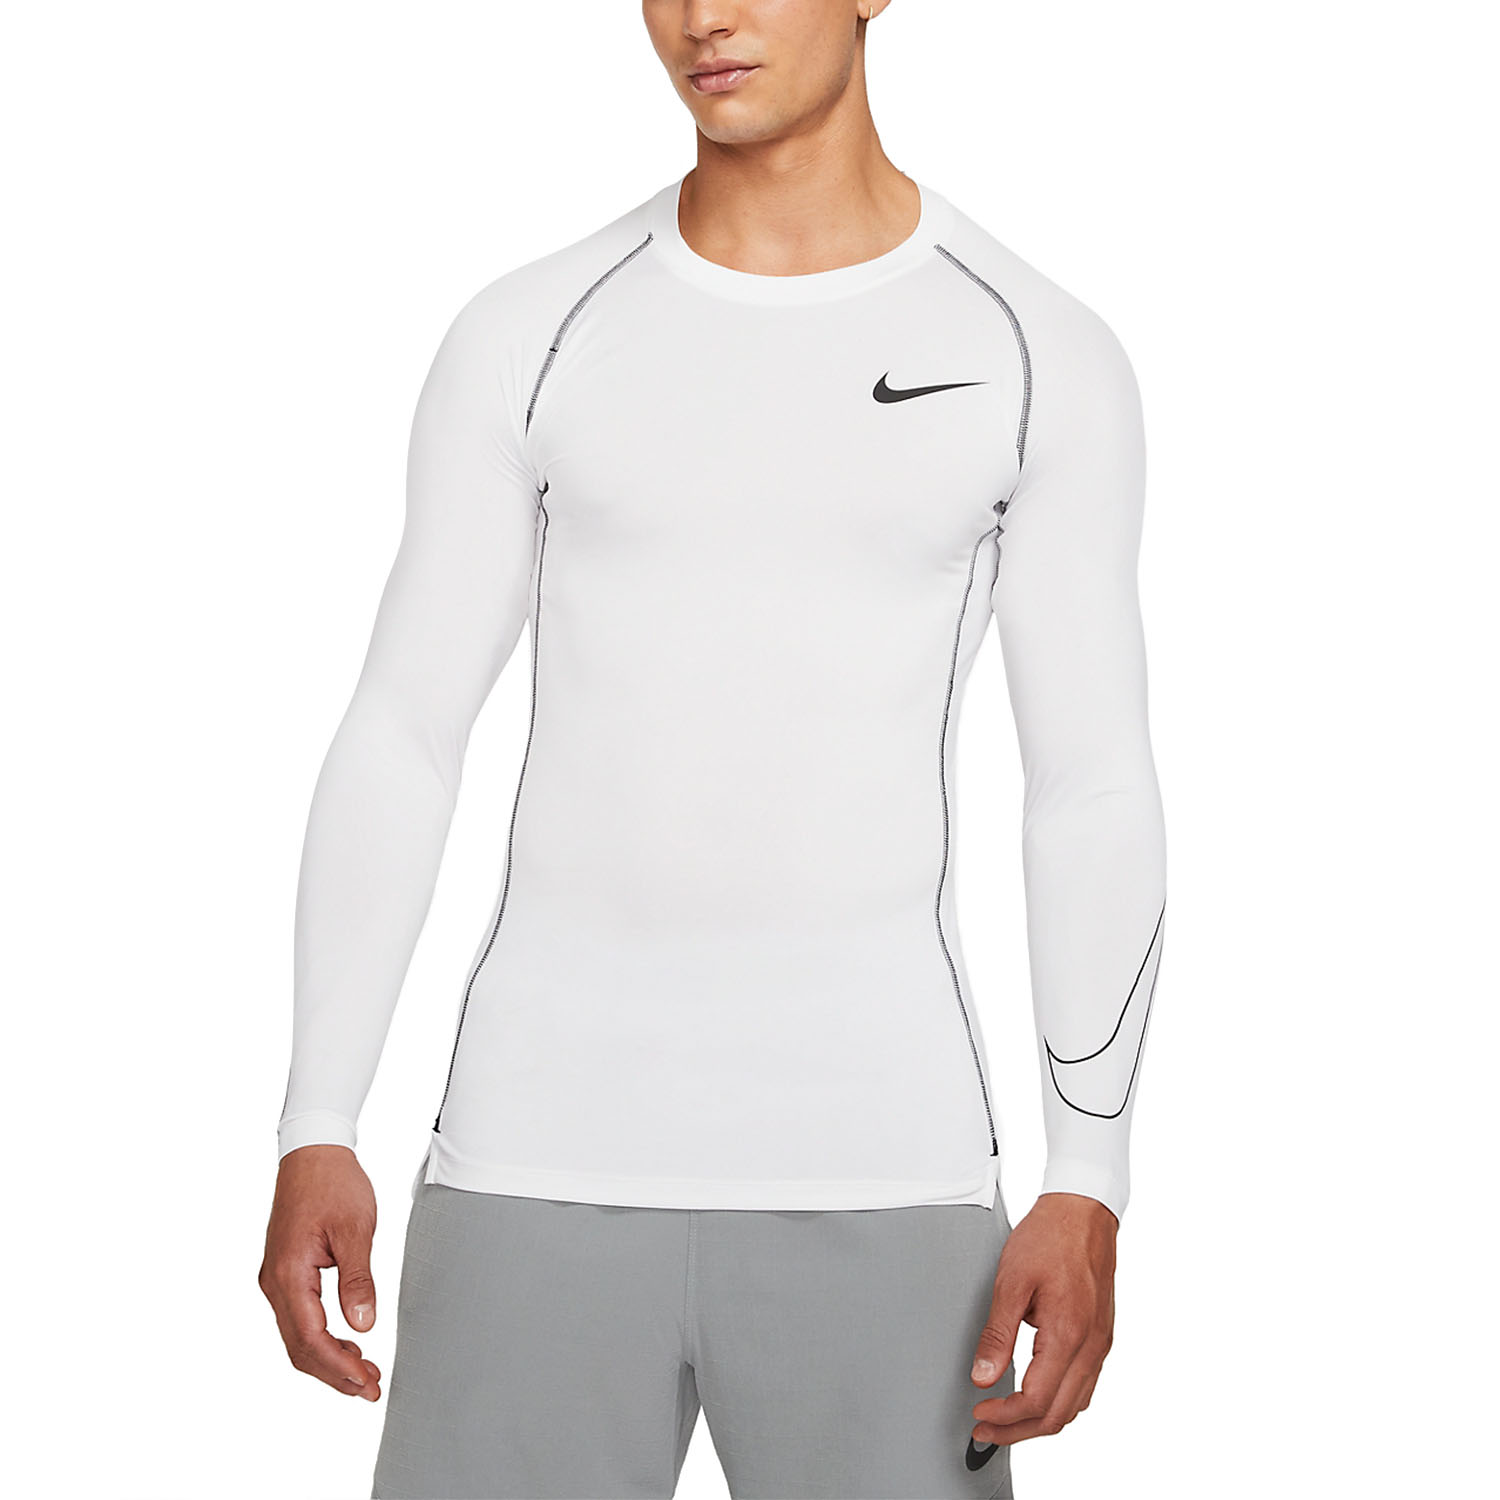 Universidad bandera Parque jurásico Nike Pro Dri-FIT Swoosh Camisa de Tenis Hombre - White/Black